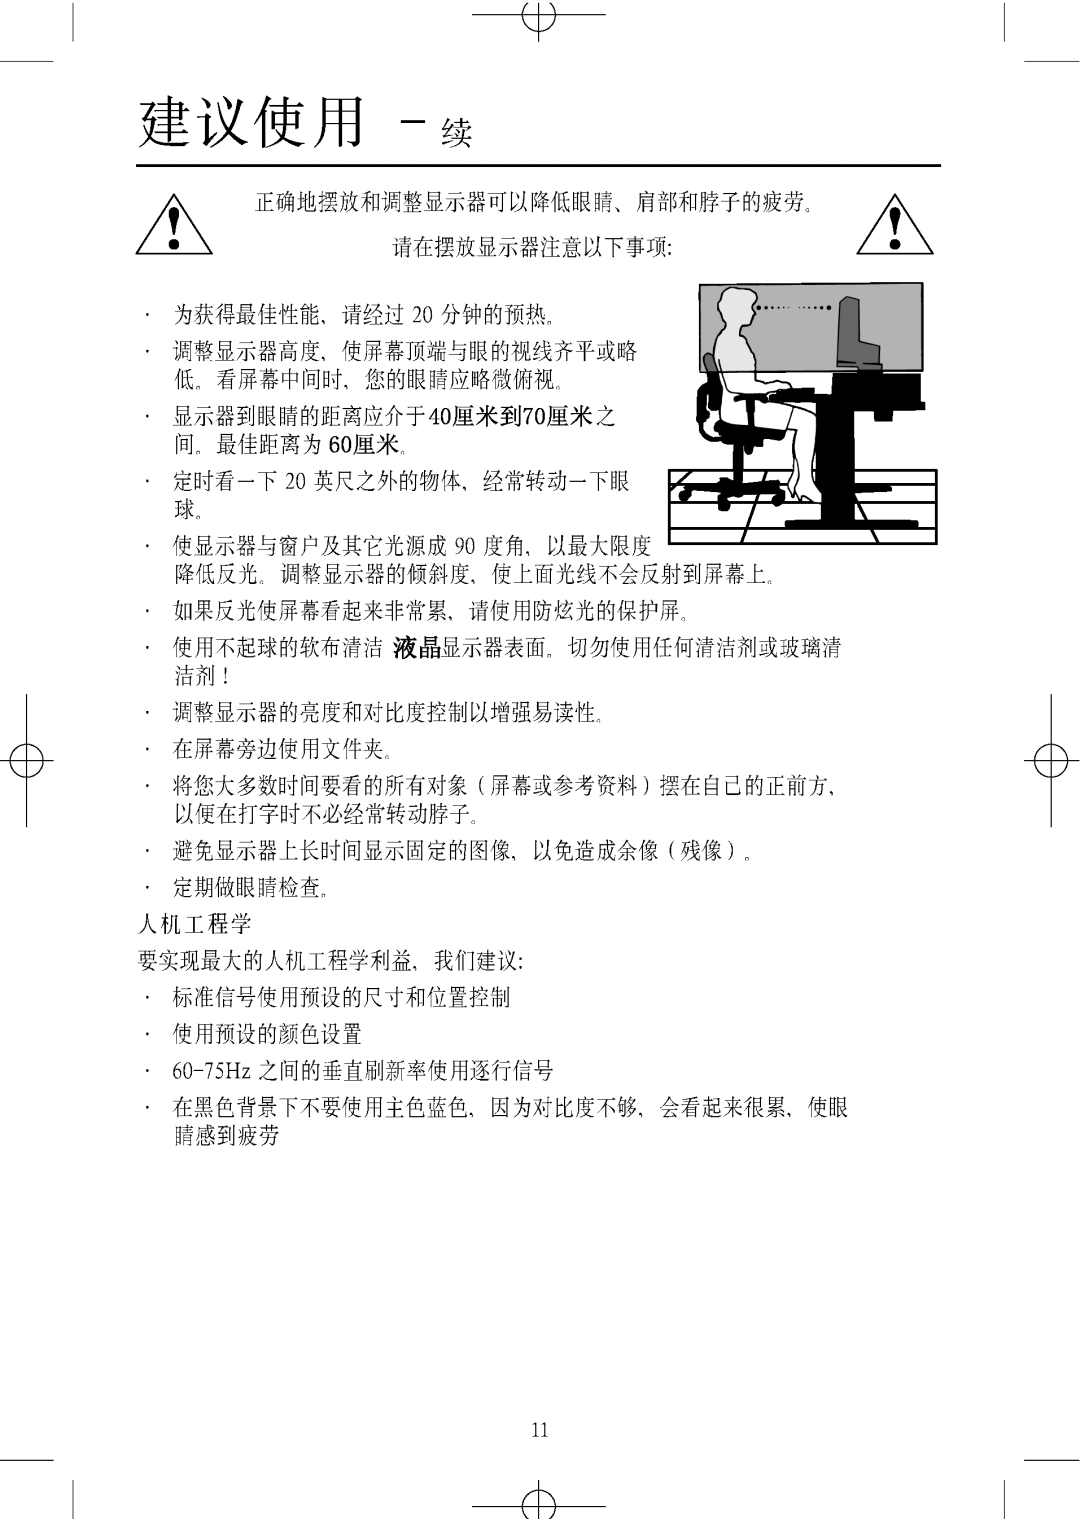 NEC LCD1704M, LCD1904M, LCD1504M manual   